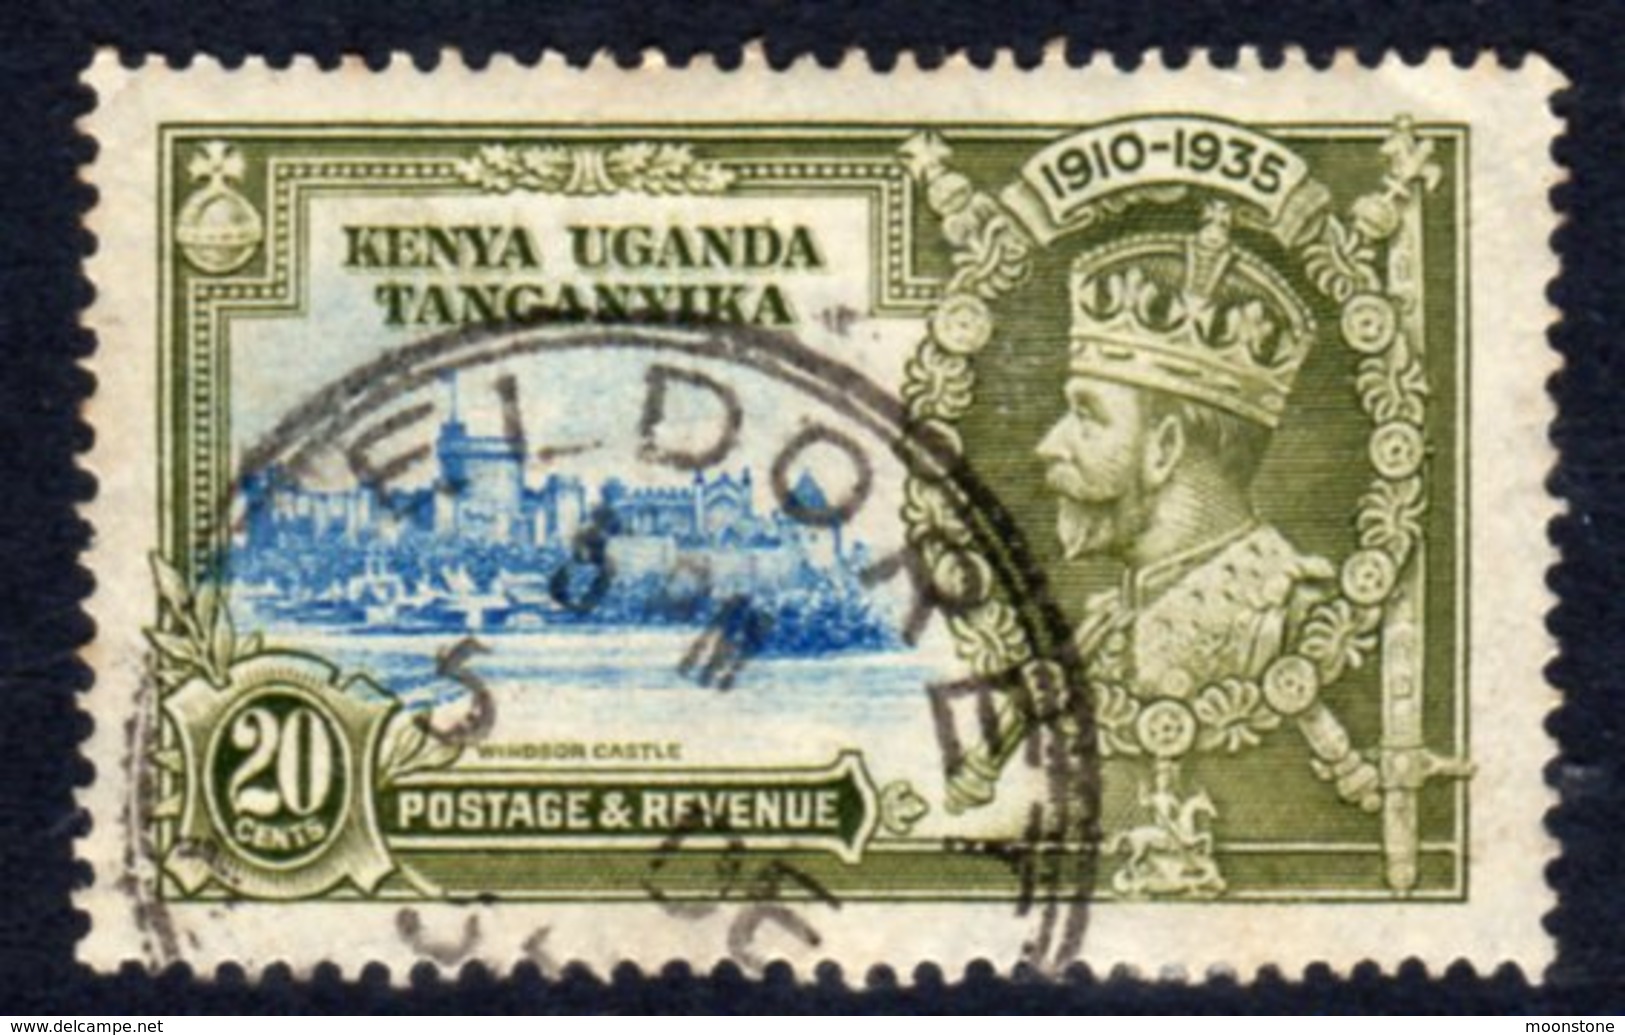 Kenya, Uganda & Tanganyika KUT GV 1935 Silver Jubilee 20c Value, Used, SG 124 (A) - Kenya, Uganda & Tanganyika